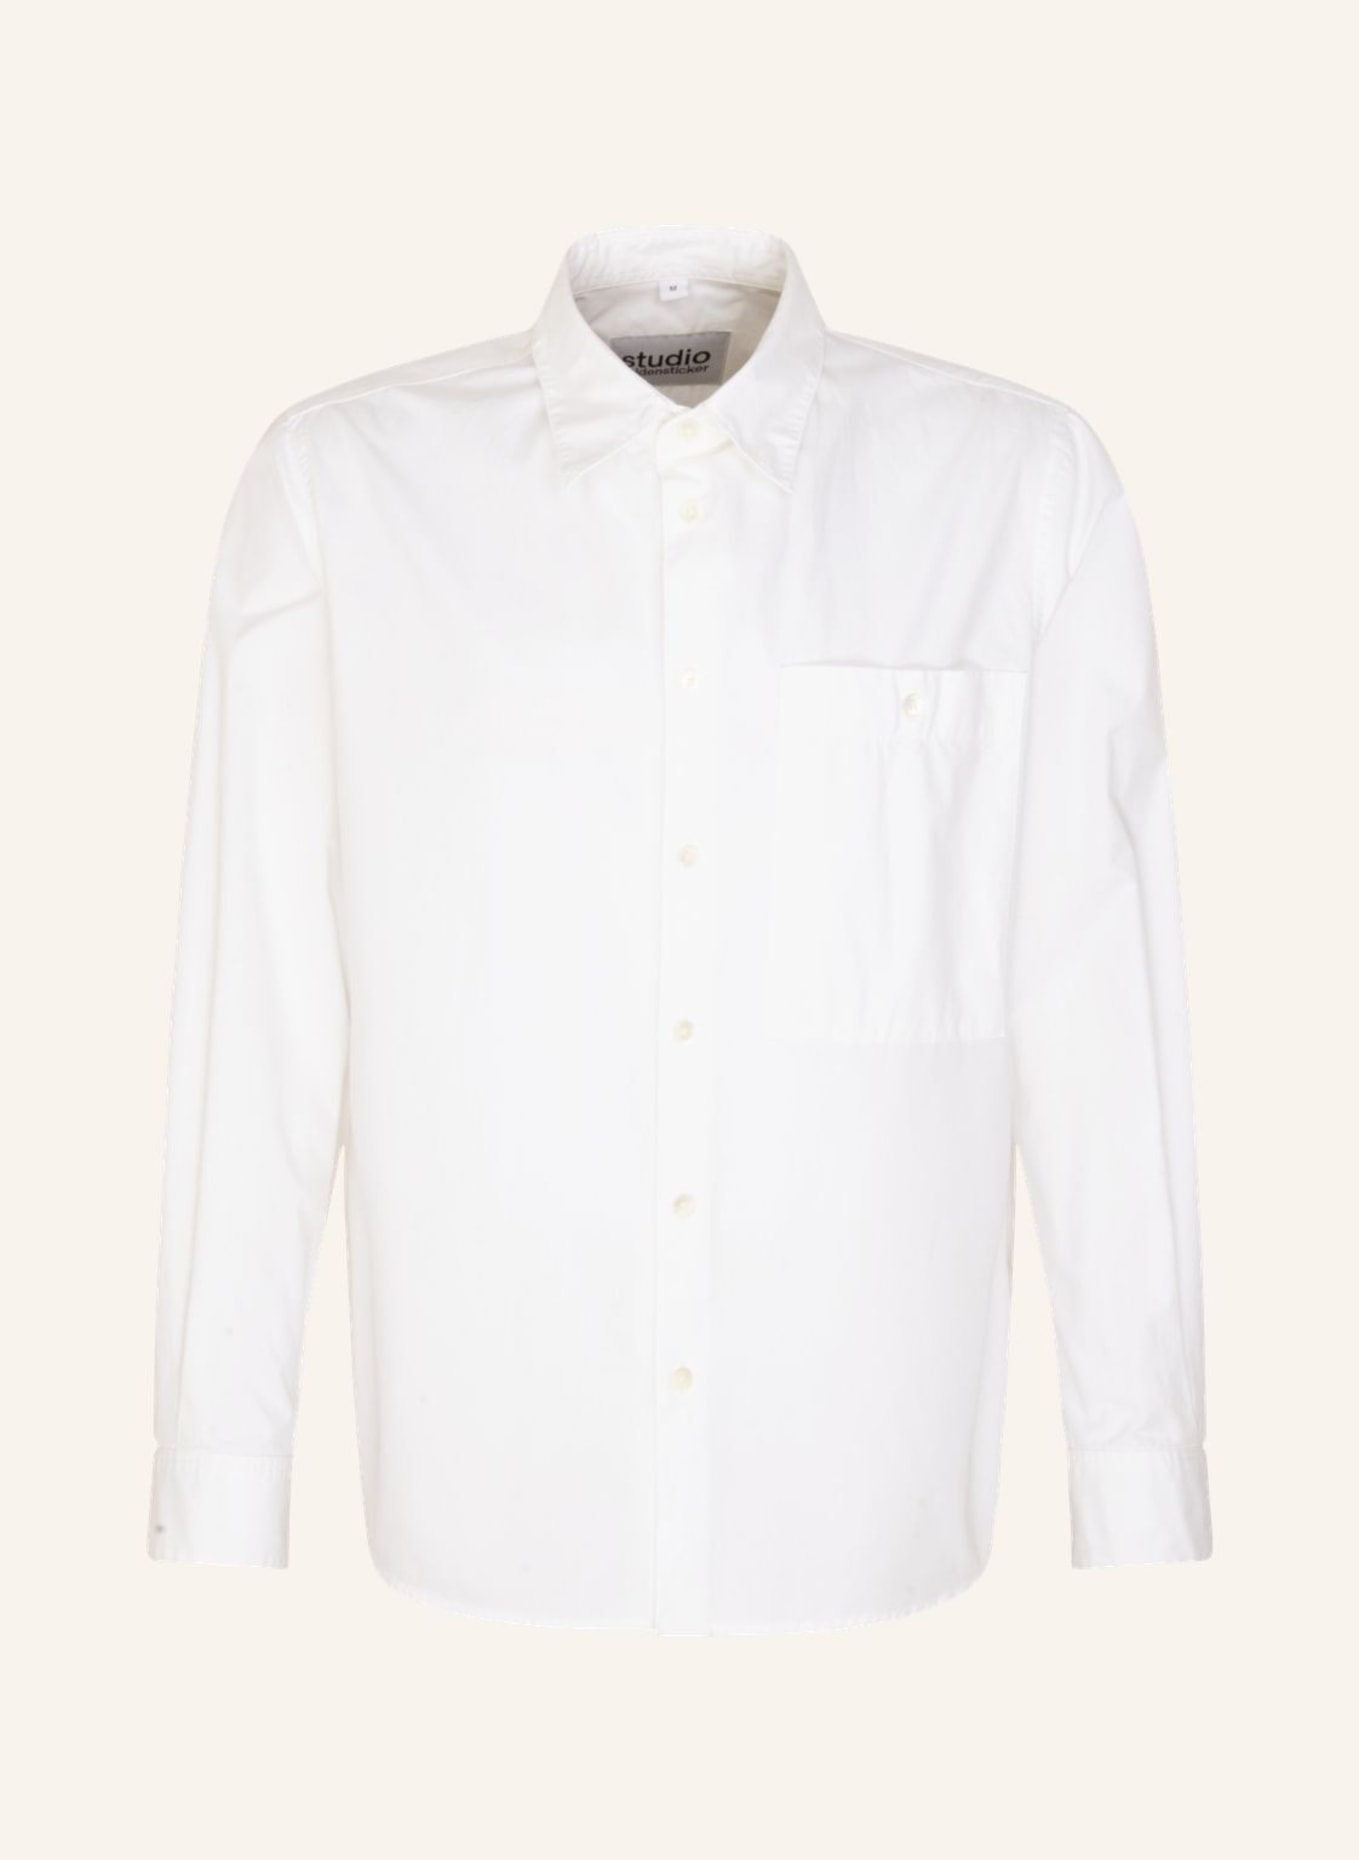 studio seidensticker Hemd, Casual Hemd Regular Fit, Farbe: WEISS (Bild 1)